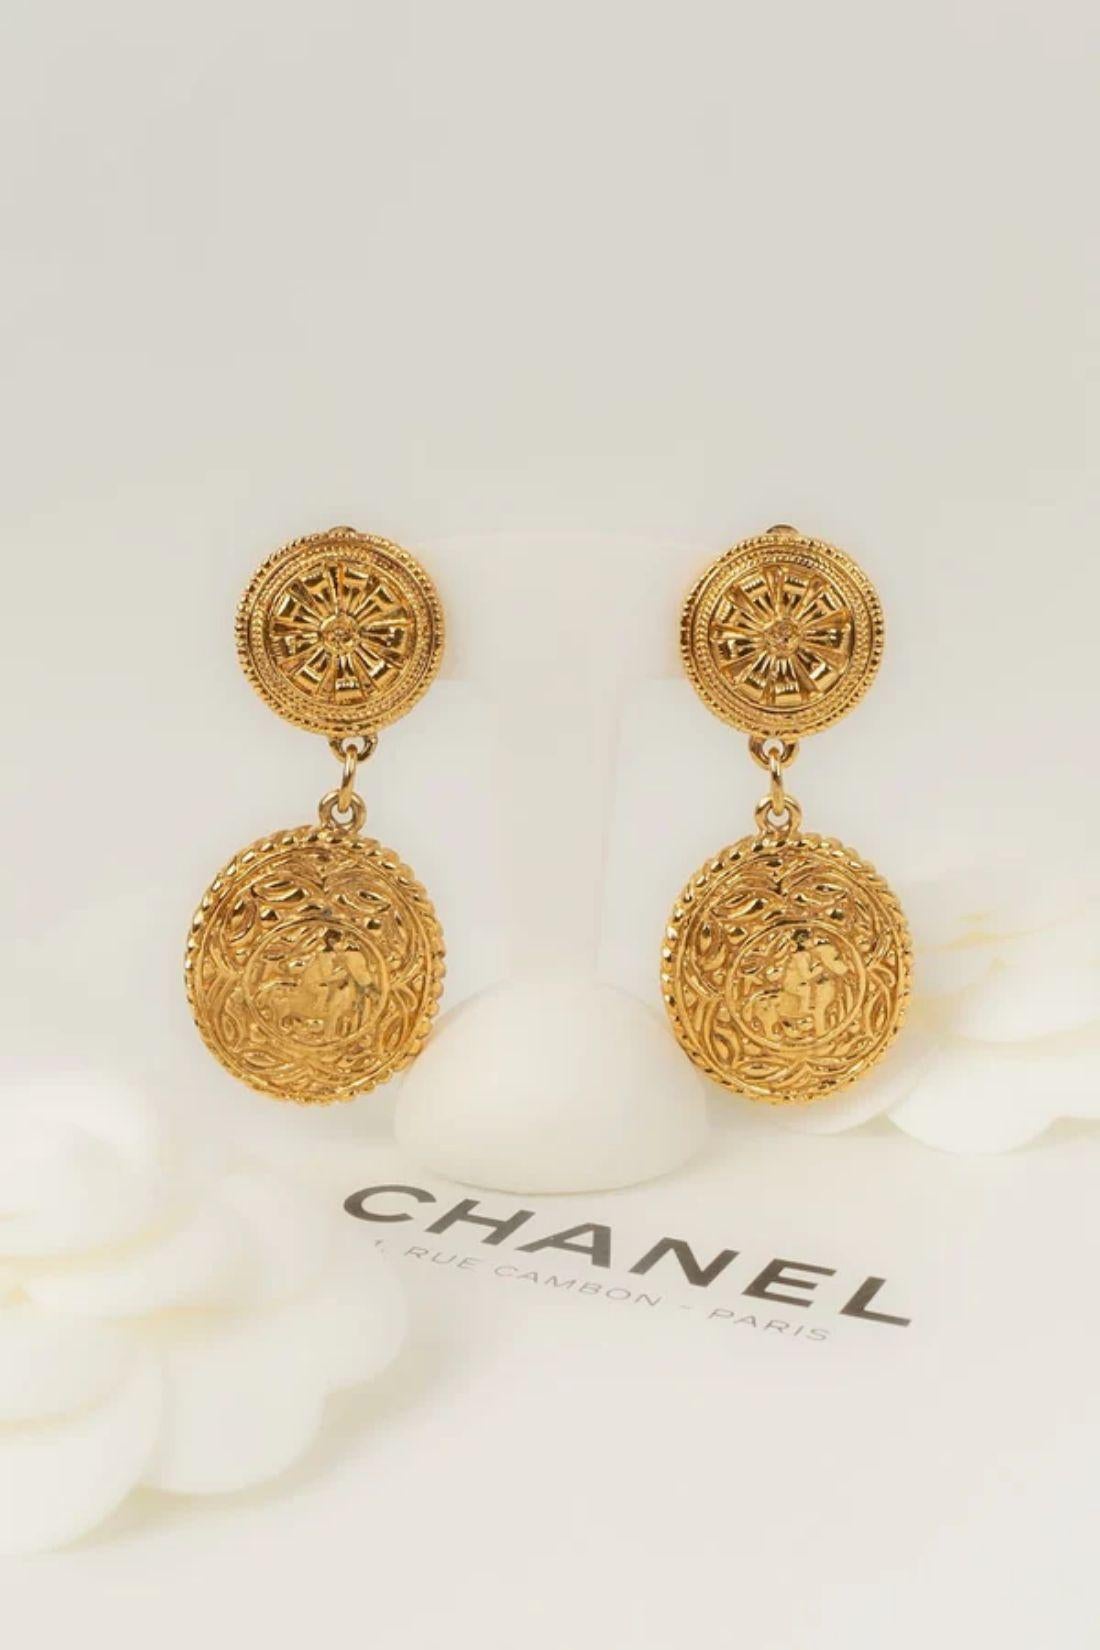 Chanel Engraved Golden Metal Earrings For Sale 3